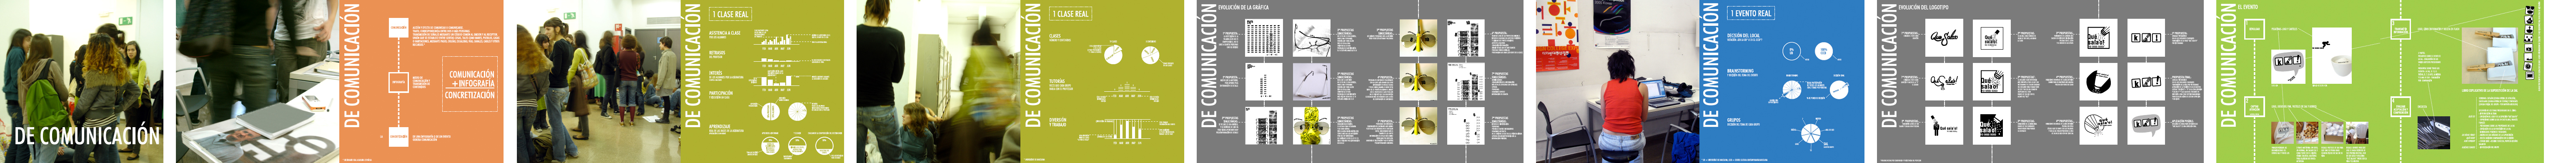 infographics_UNIVERSITY_OF_BARCELONA_3.jpg